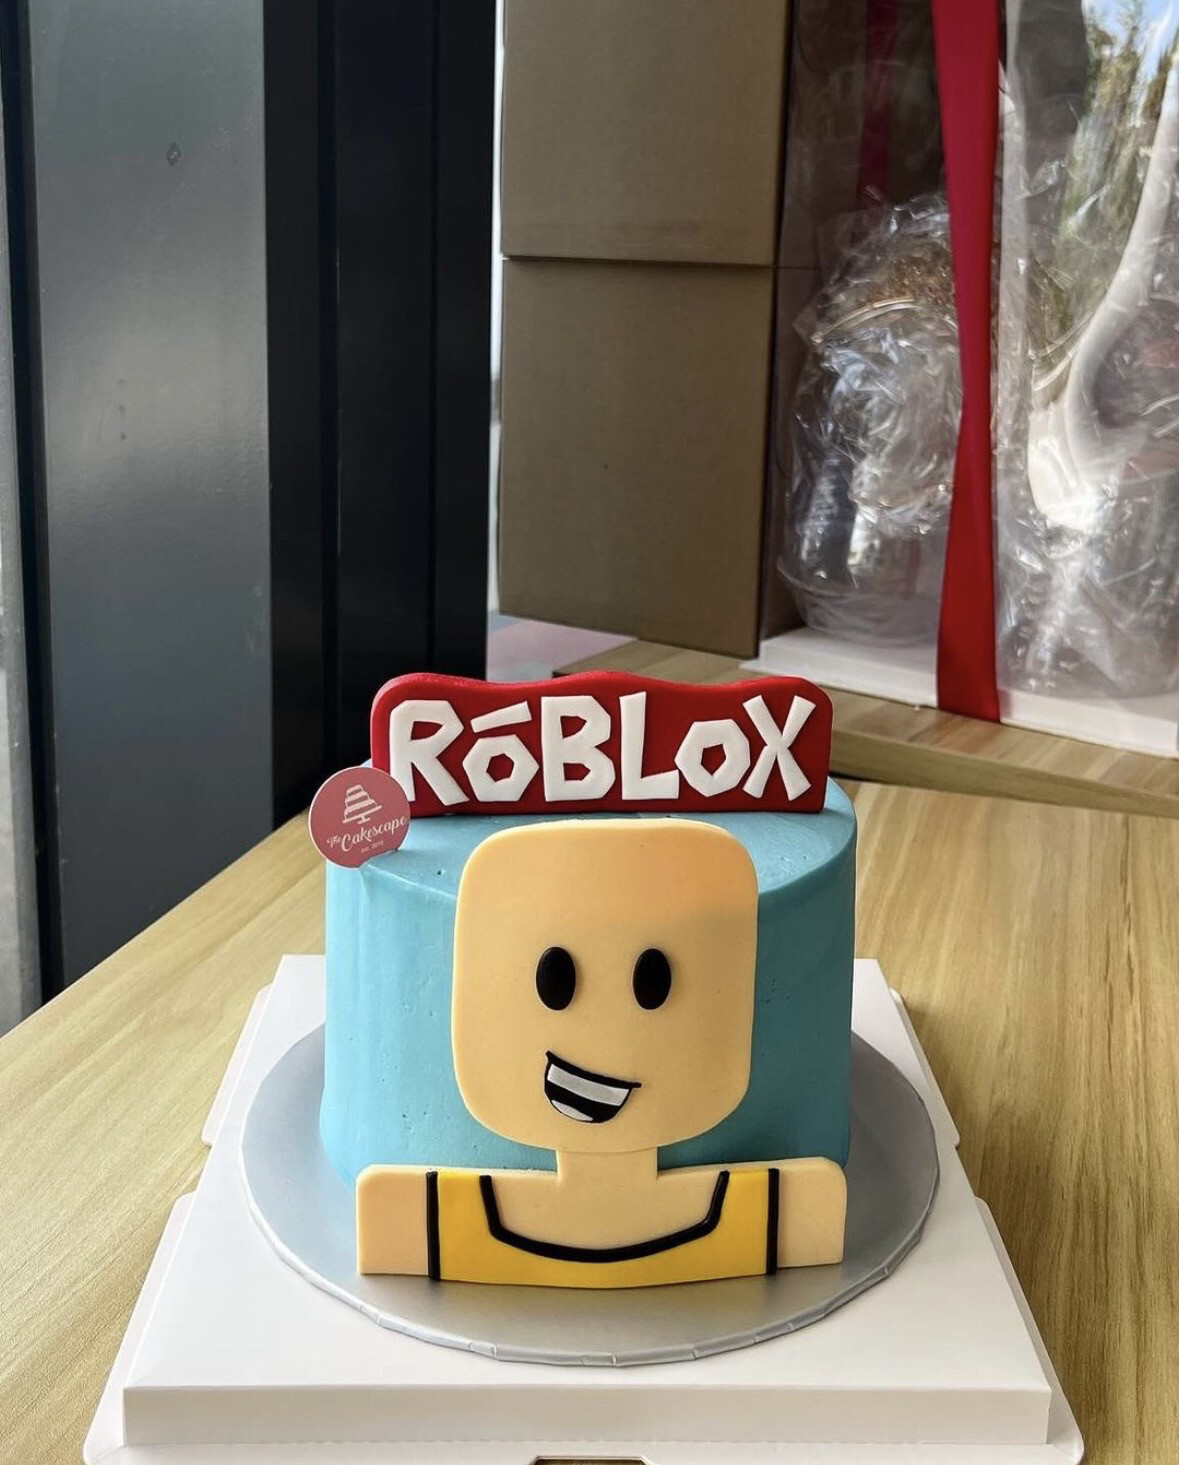 Roblox Cake 6